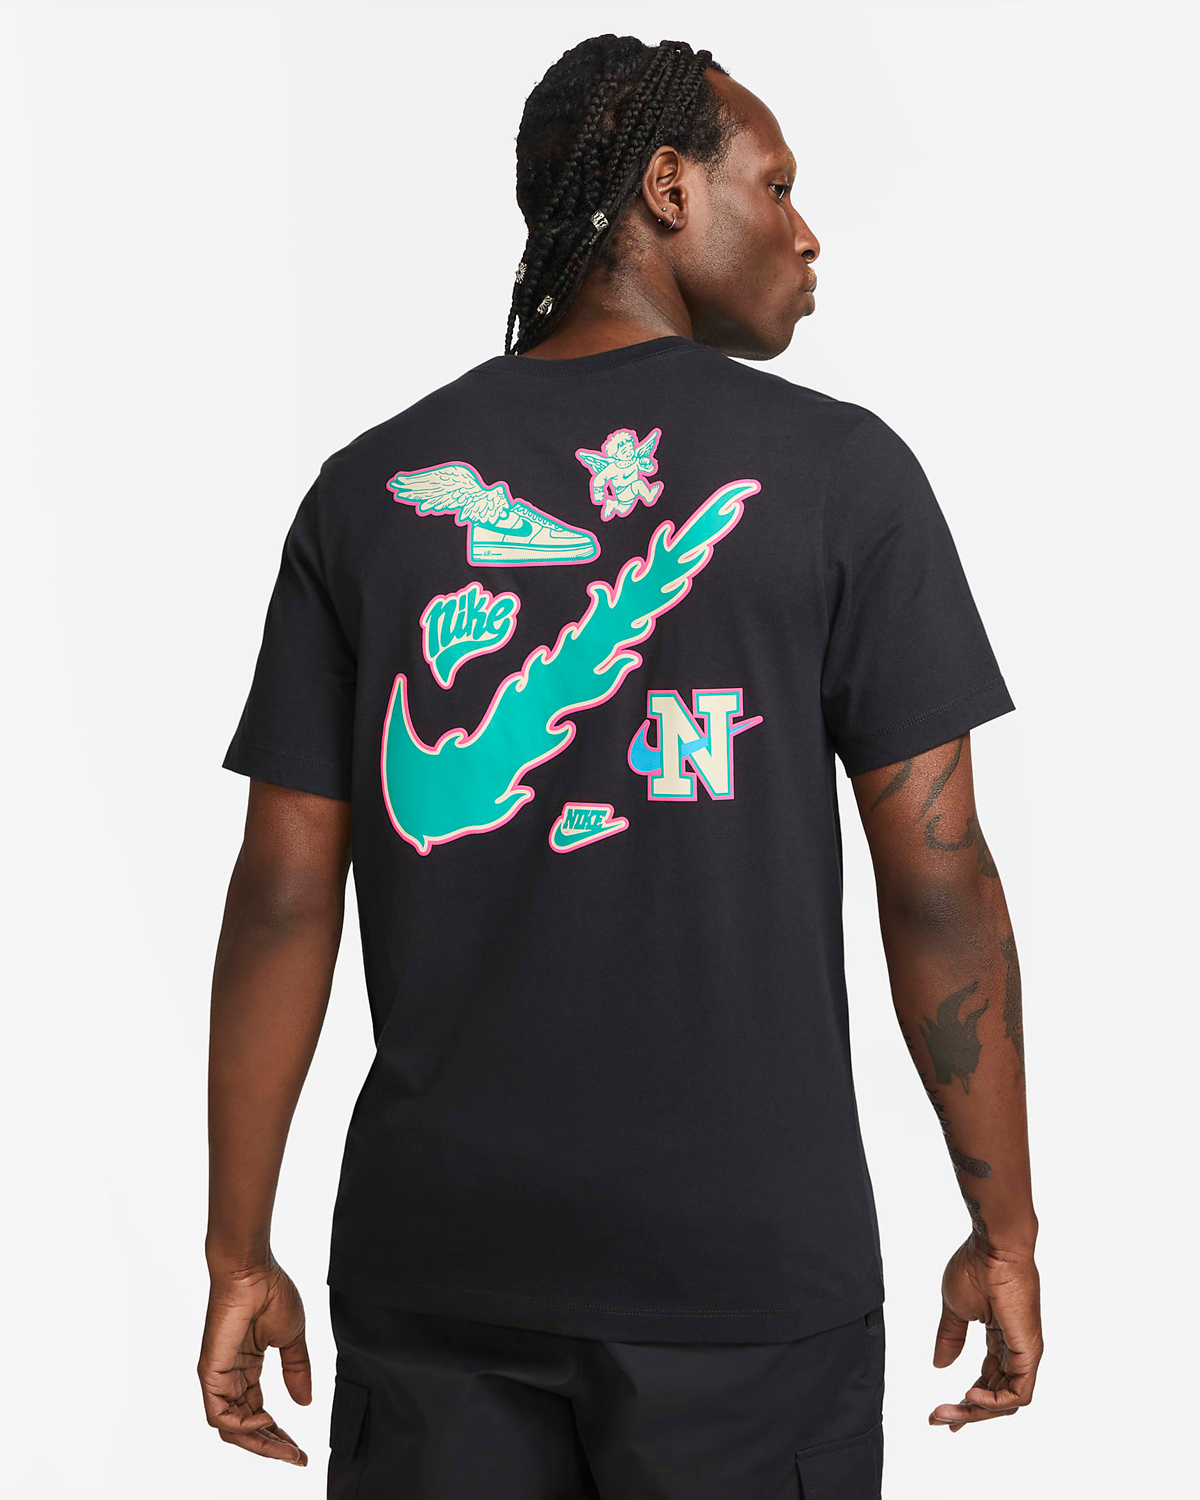 Nike-Sportswear-T-Shirt-Black-Pink-Blue-Clear-Jade-2